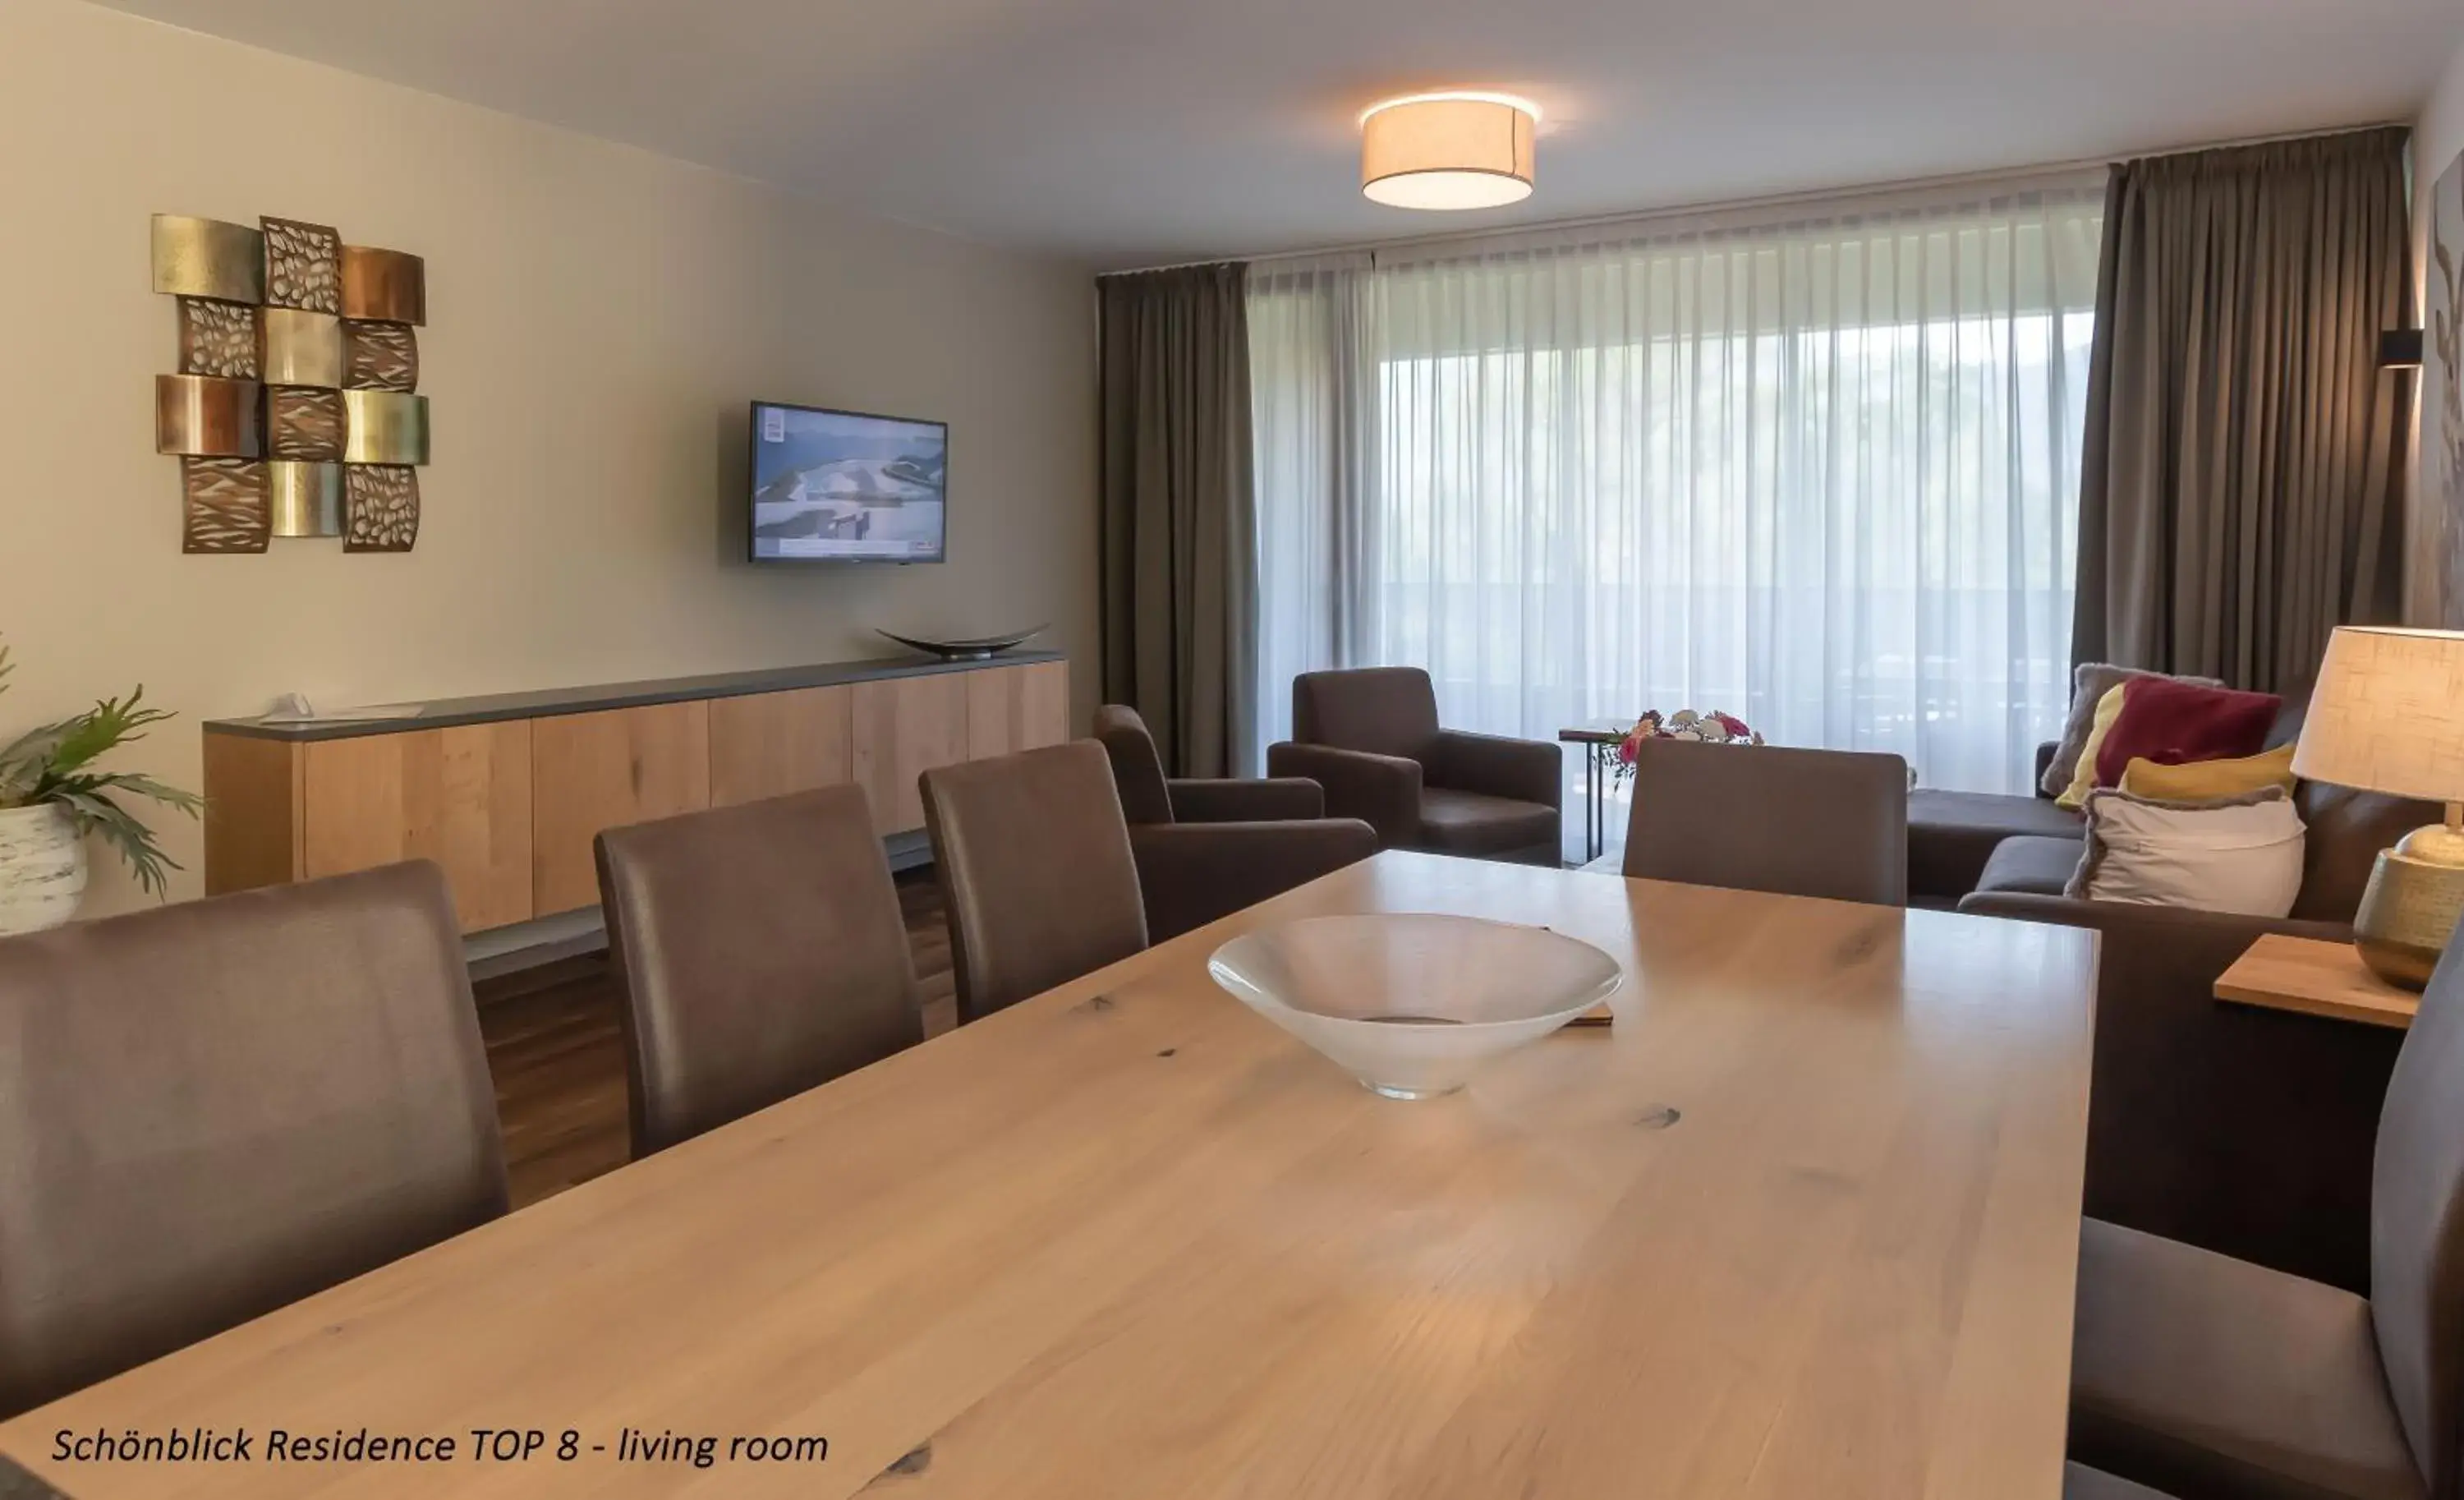 Living room, Dining Area in Schonblick